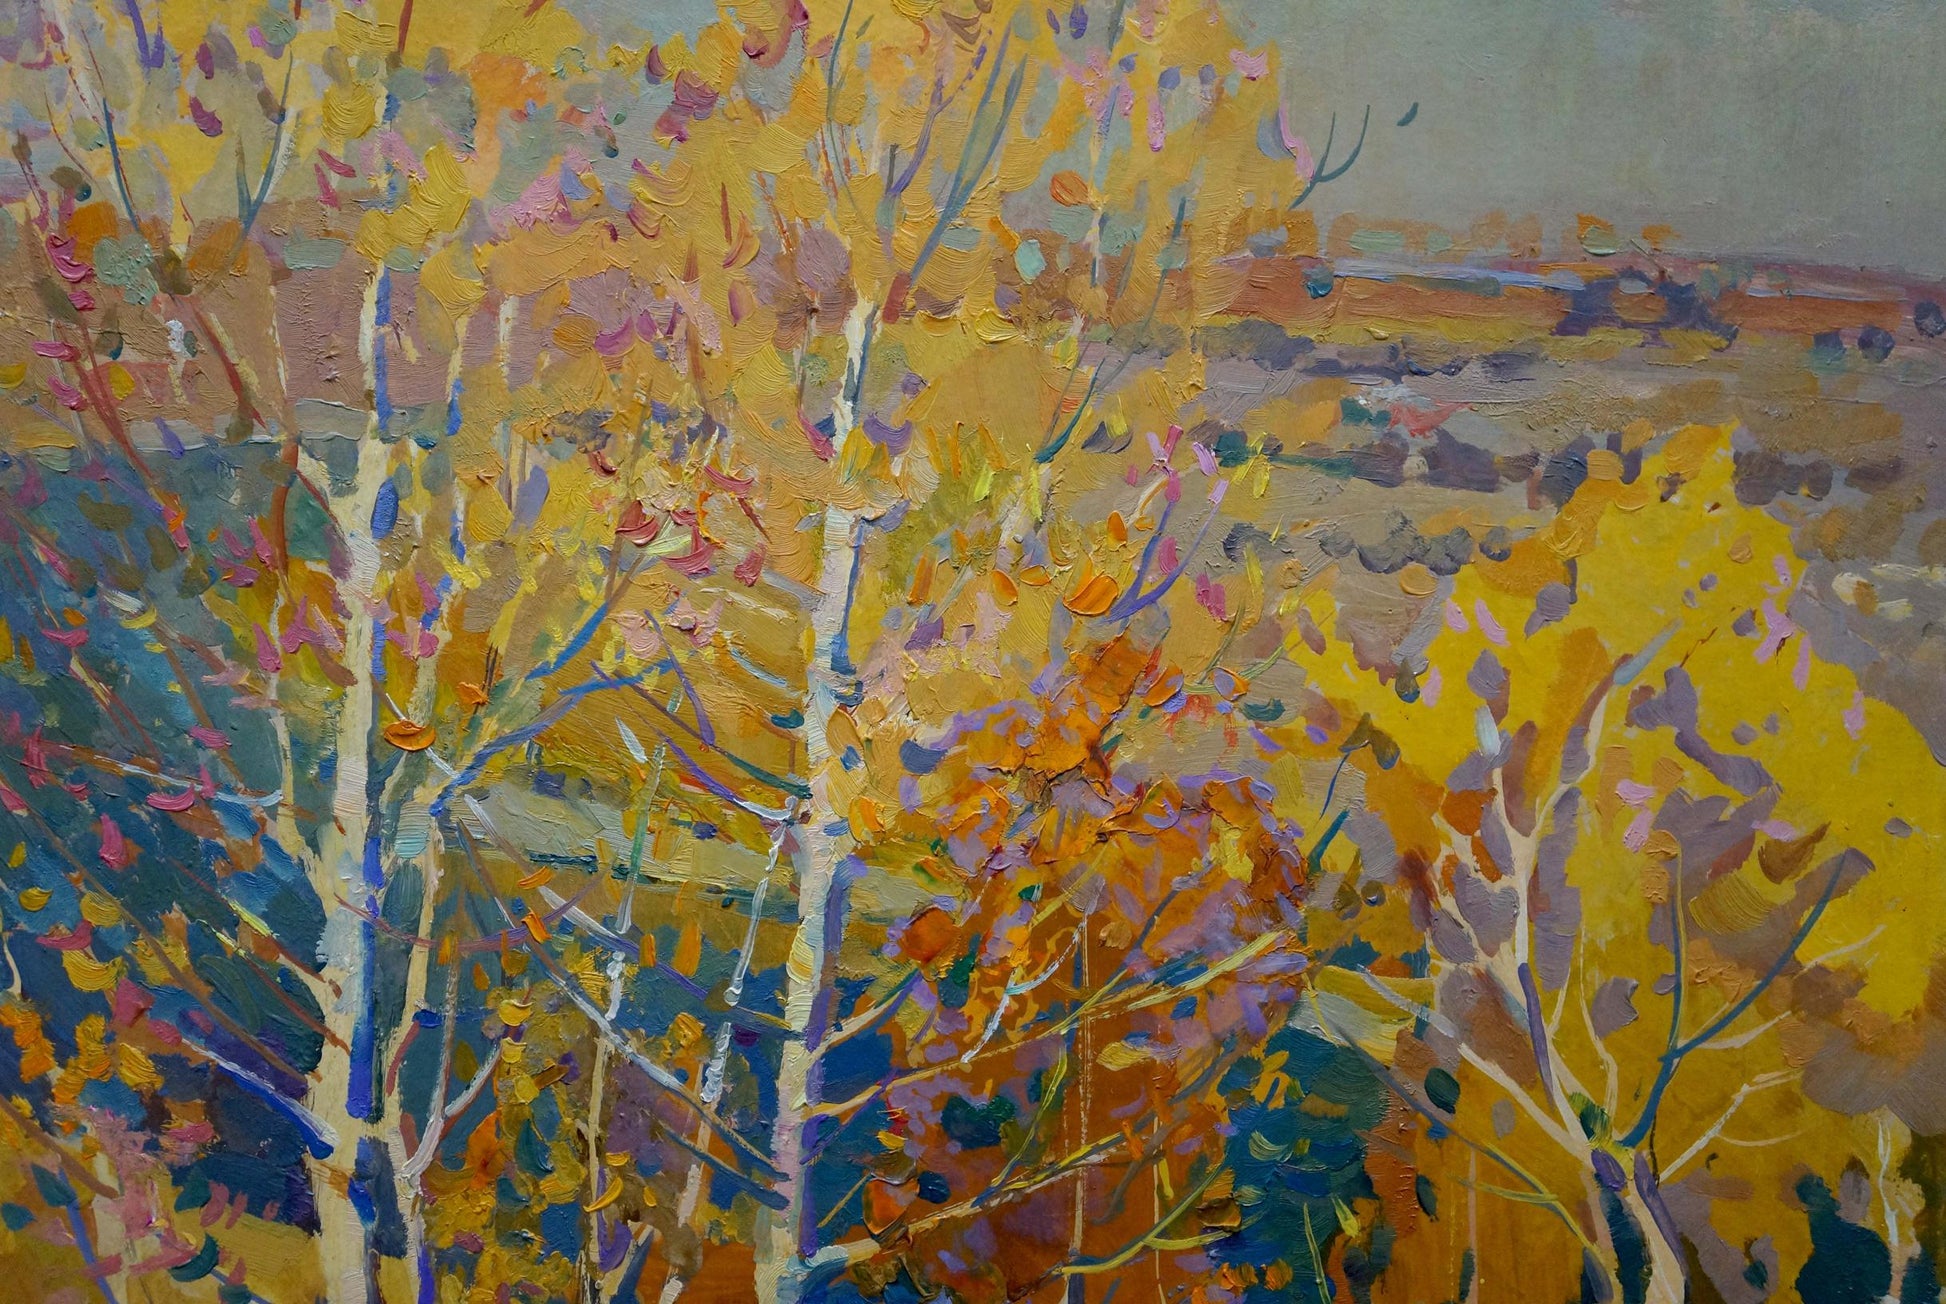 In this painting, Kolesnik illustrates the charm of autumn